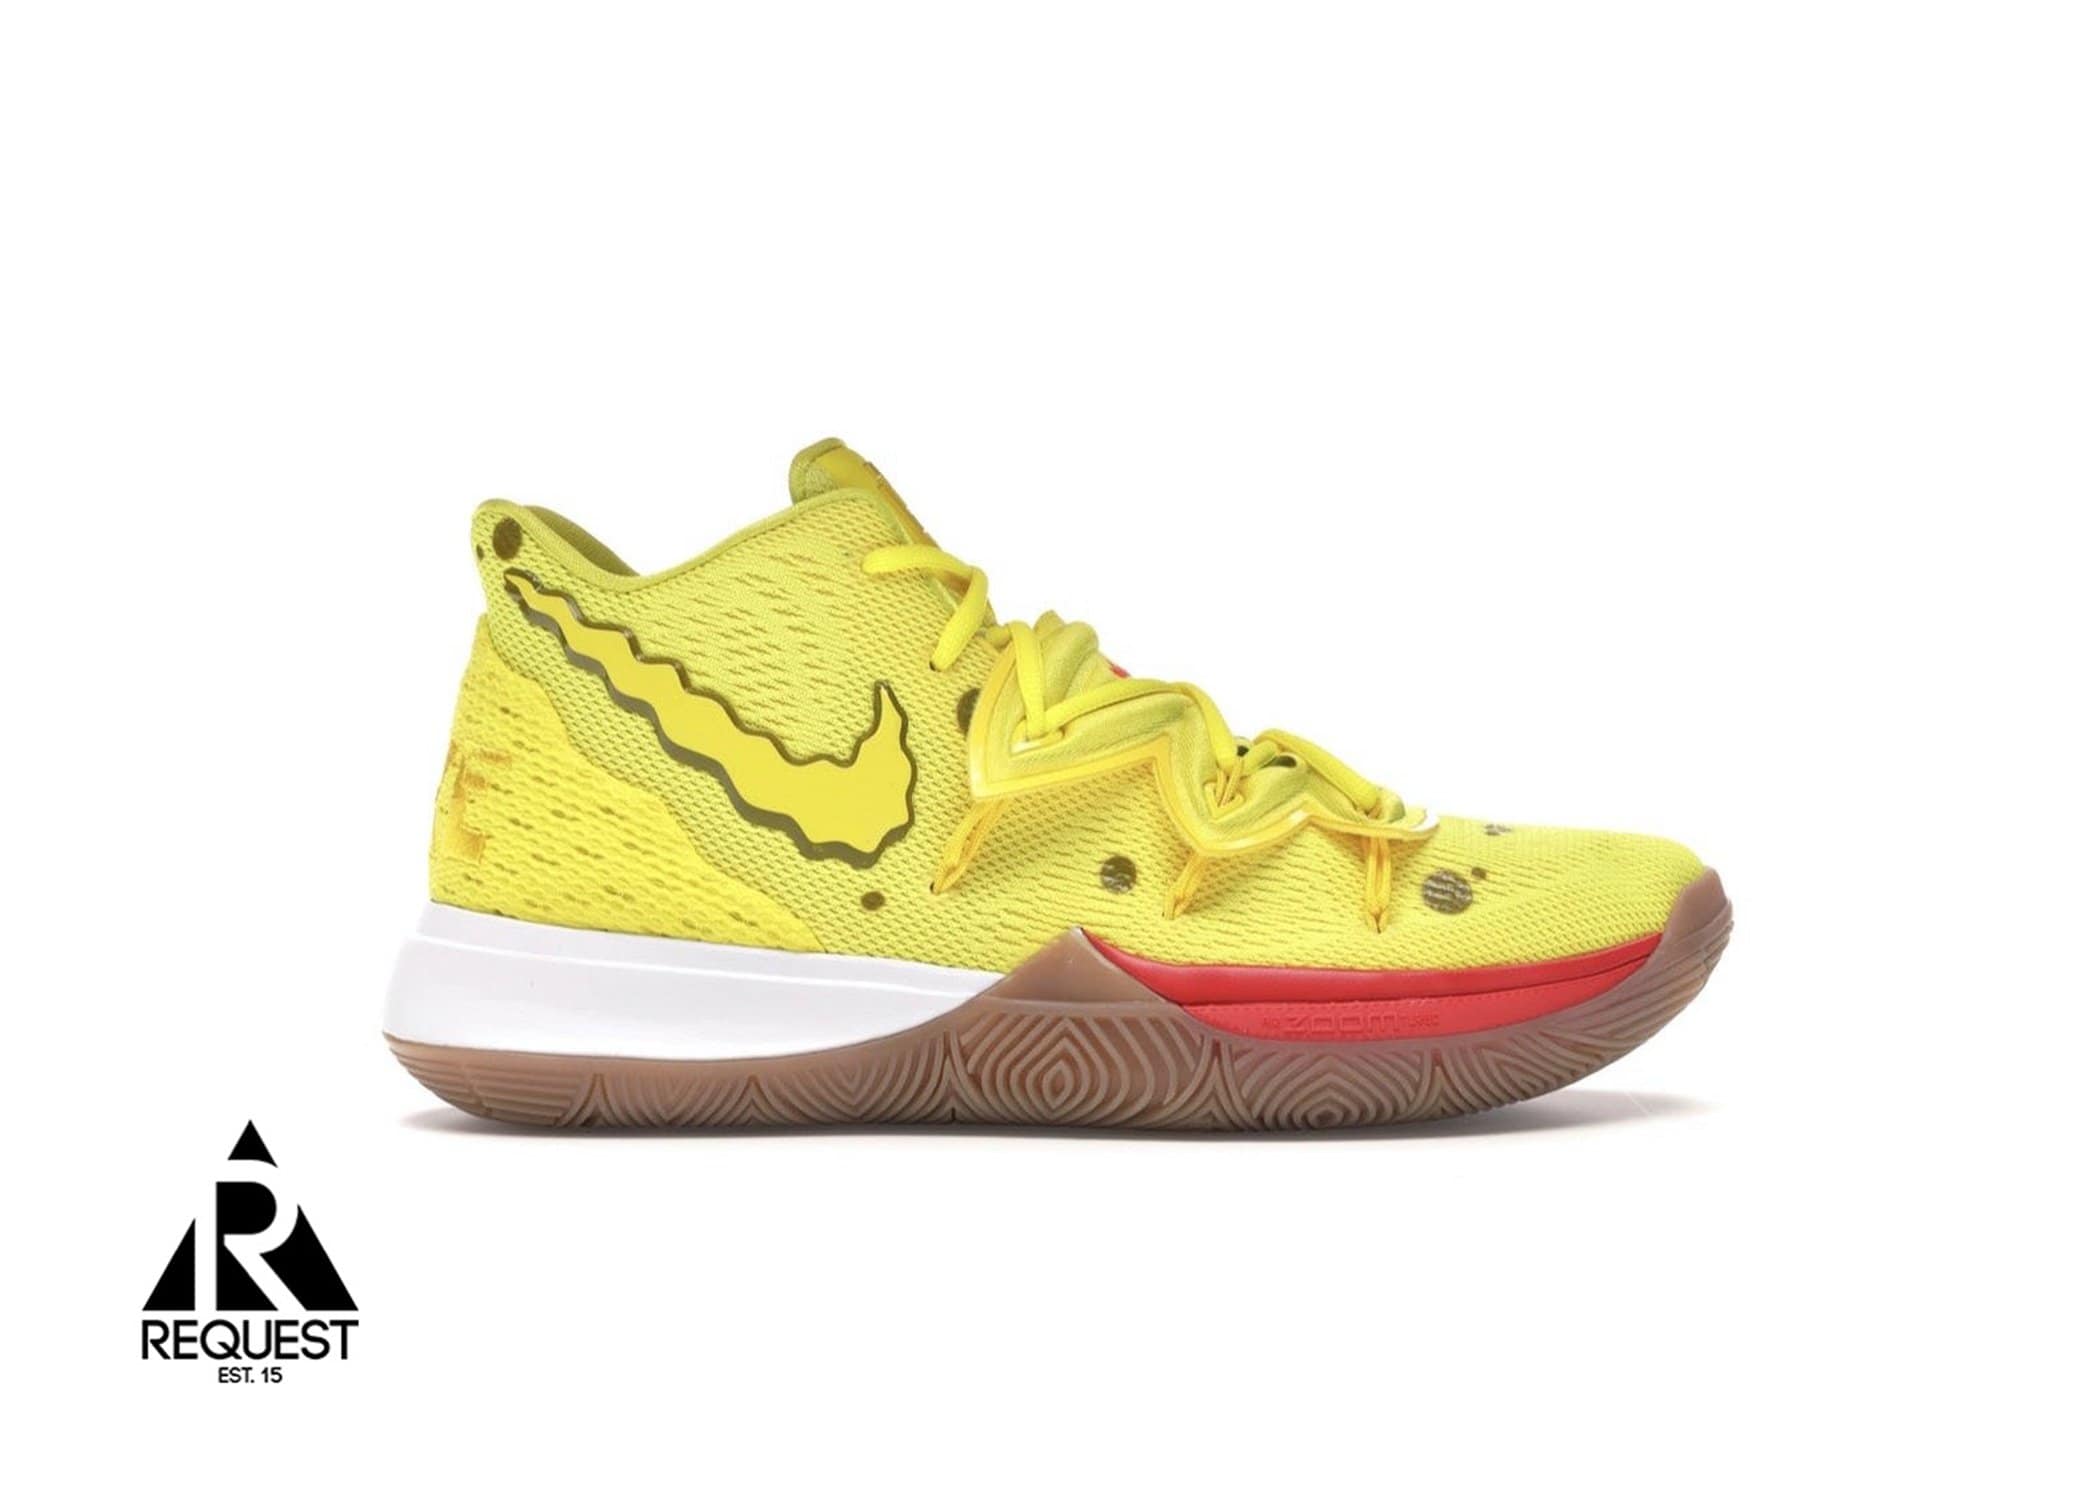 Nike Kyrie 5 “Spongebob Squarepants”